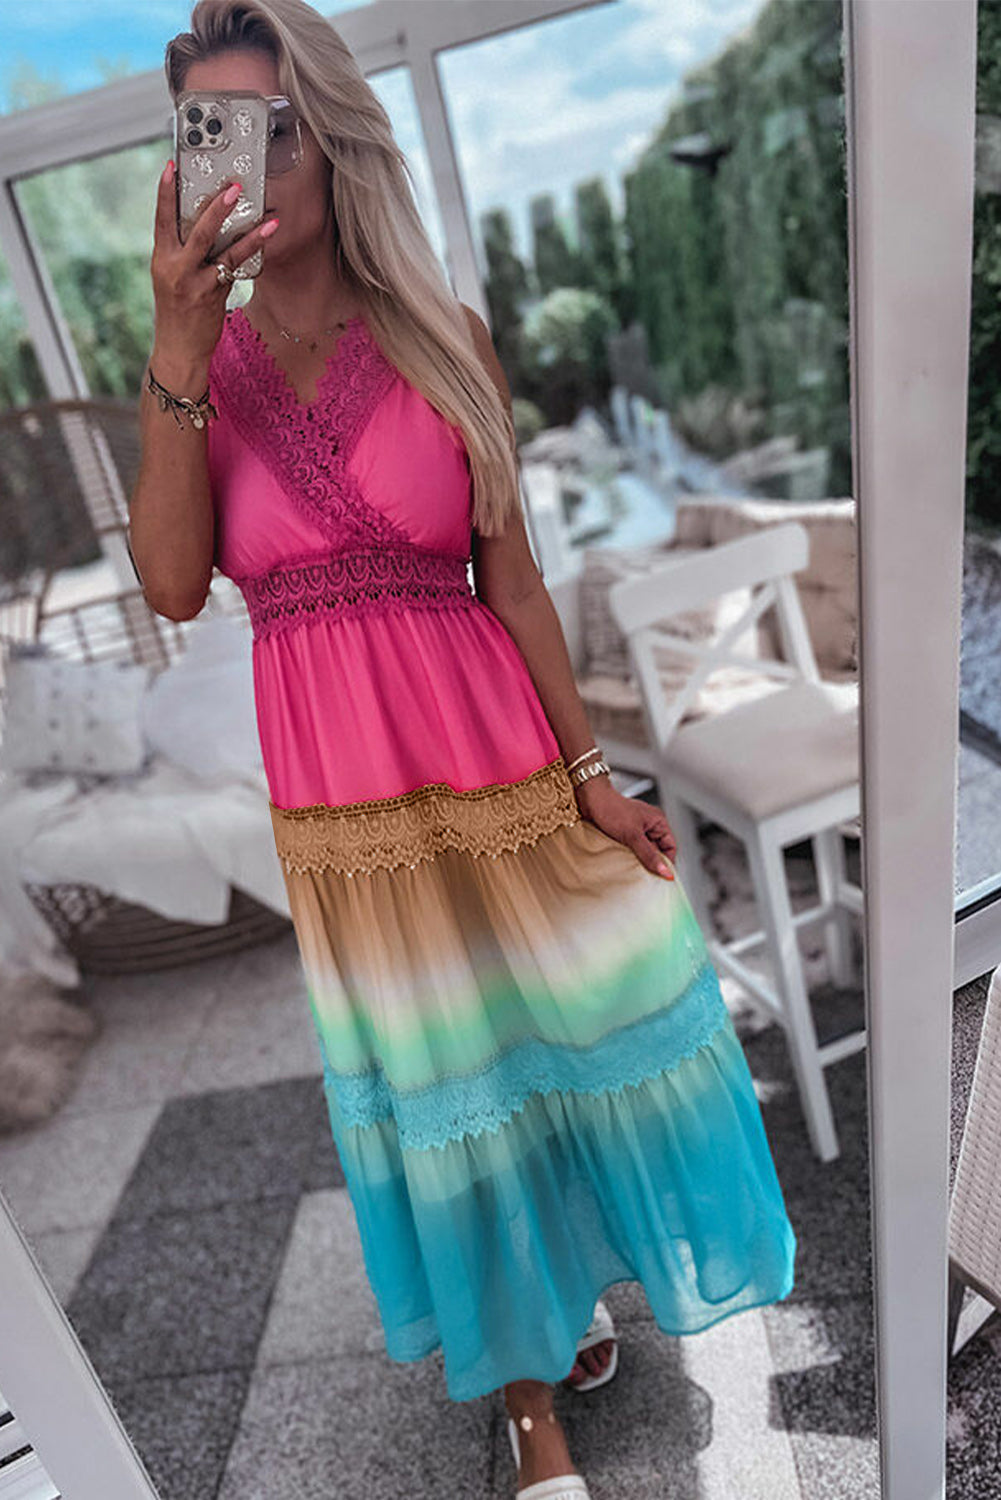 Multicolor Lace Stitching Gradient Rainbow Long Dress